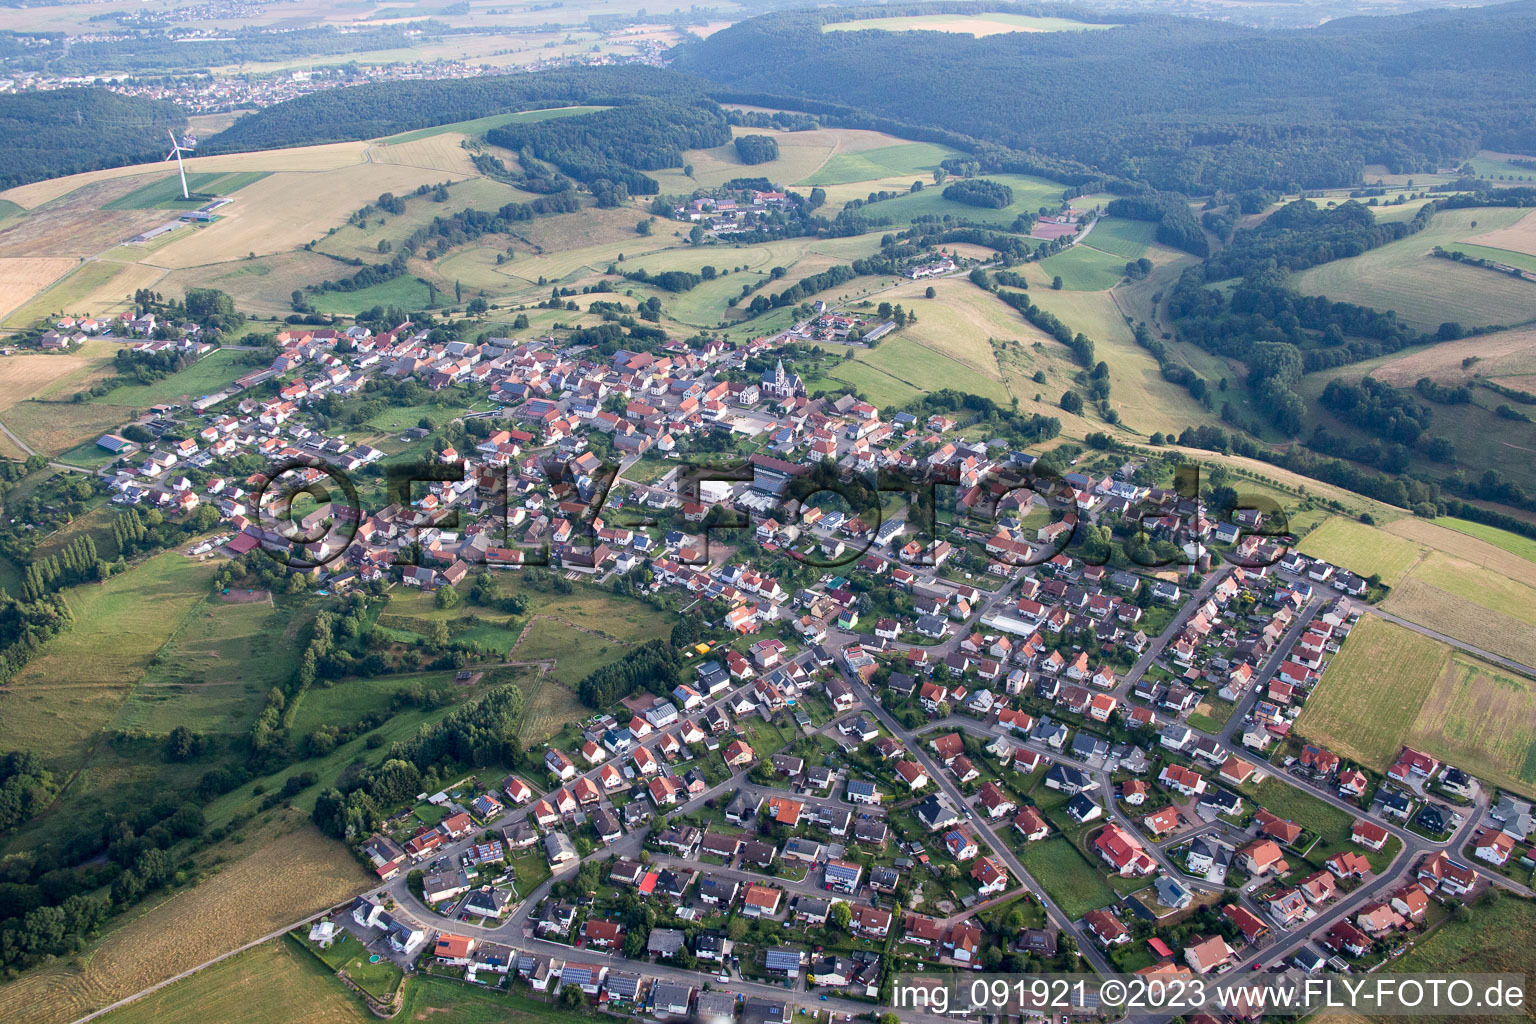 Martinshöhe in the state Rhineland-Palatinate, Germany